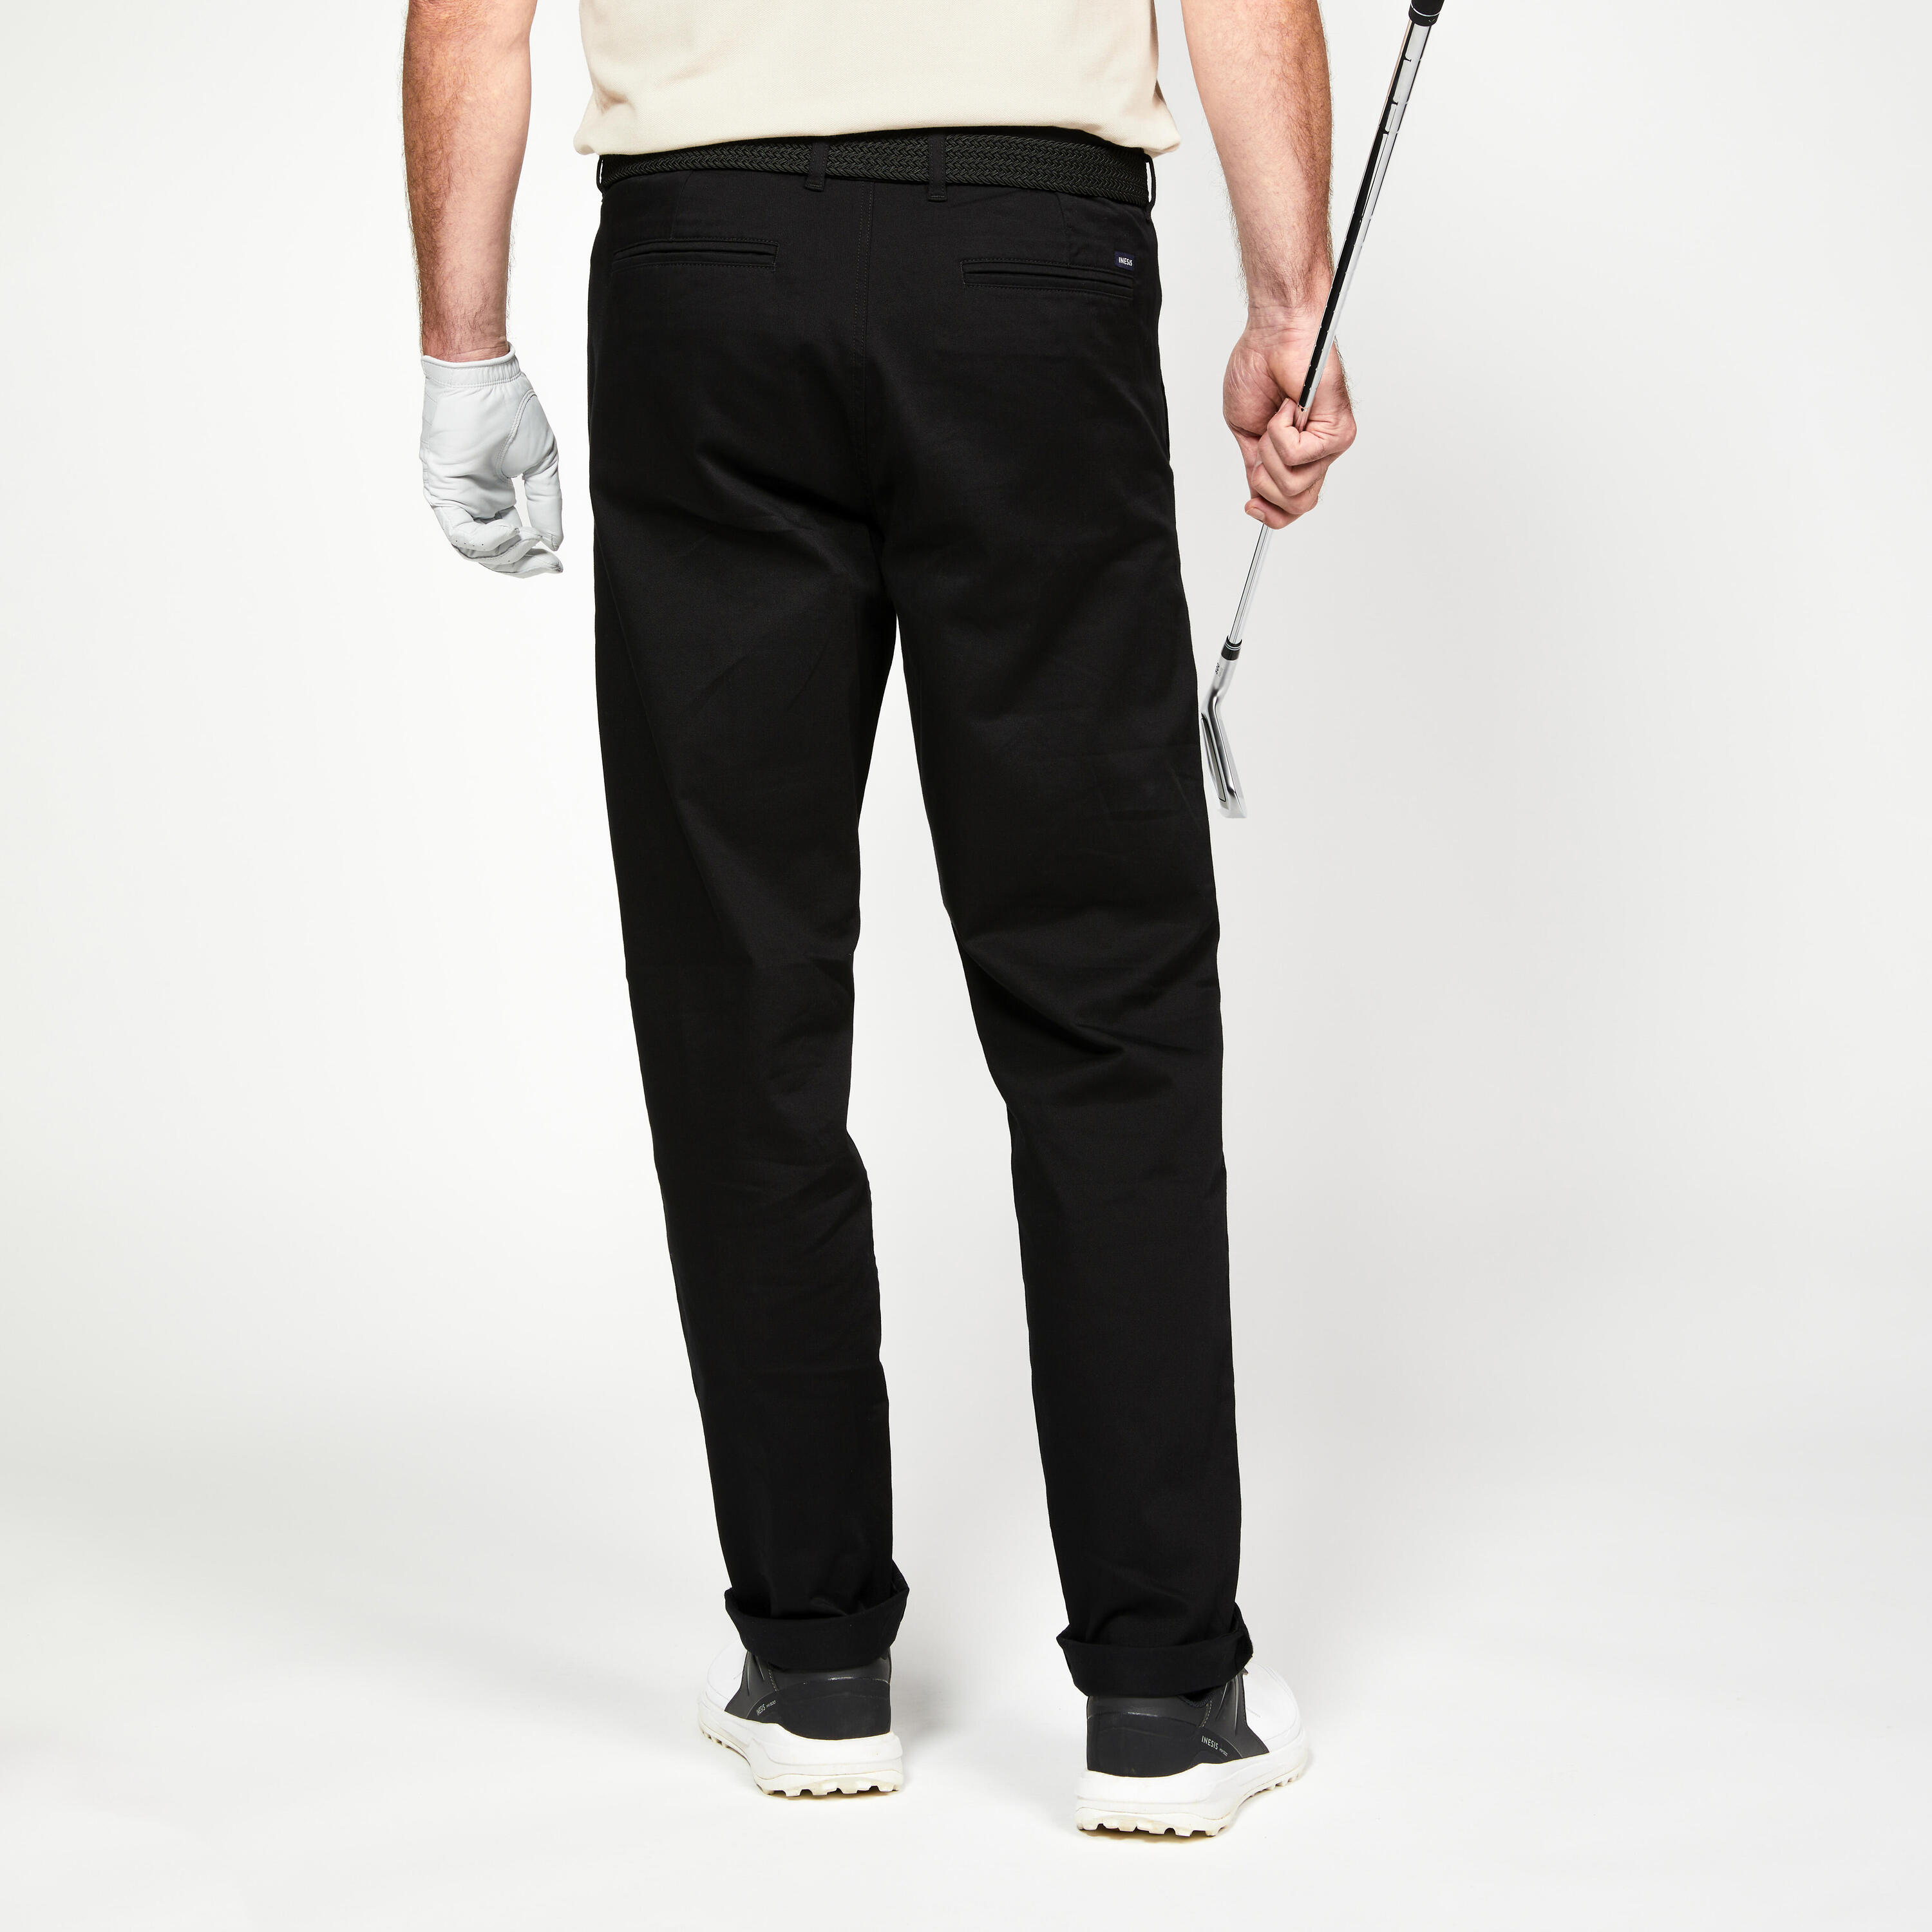 Men's Golf Chino Trousers Cotton - MW500 Black 2/4